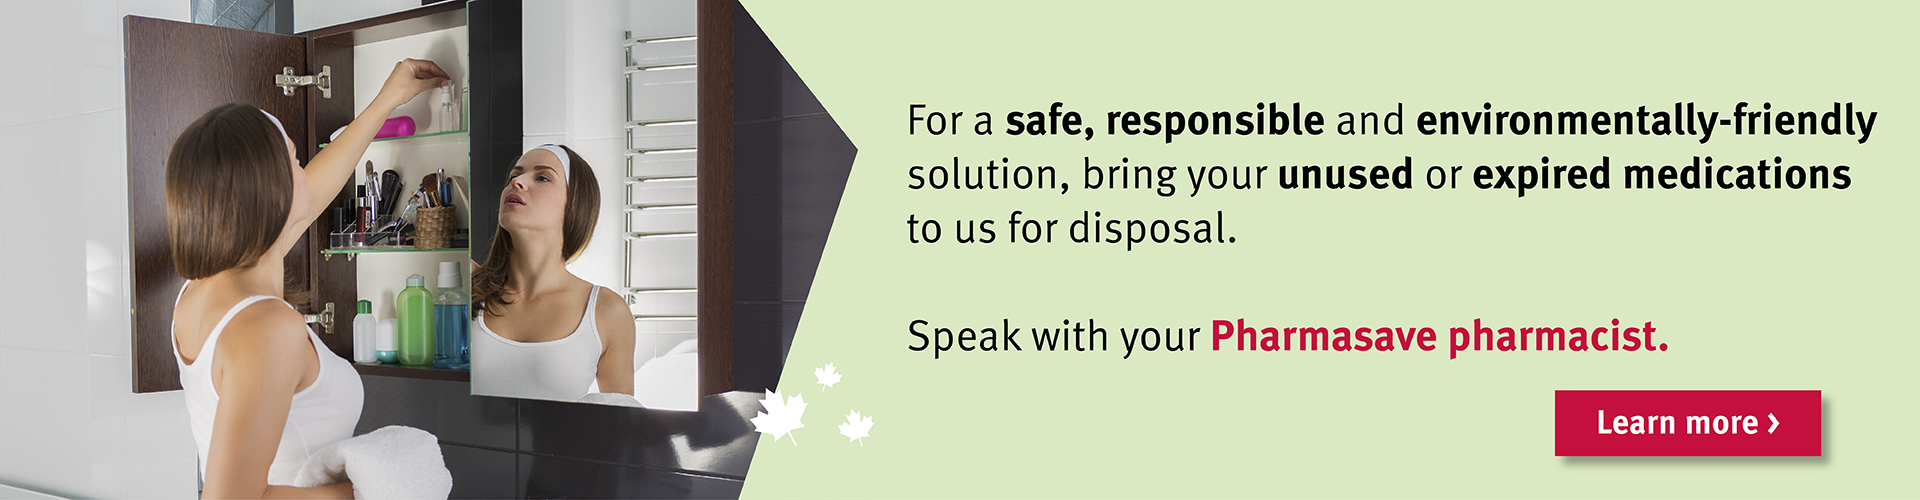 For safe medication disposal, speak to your Pharmasave pharmacist.